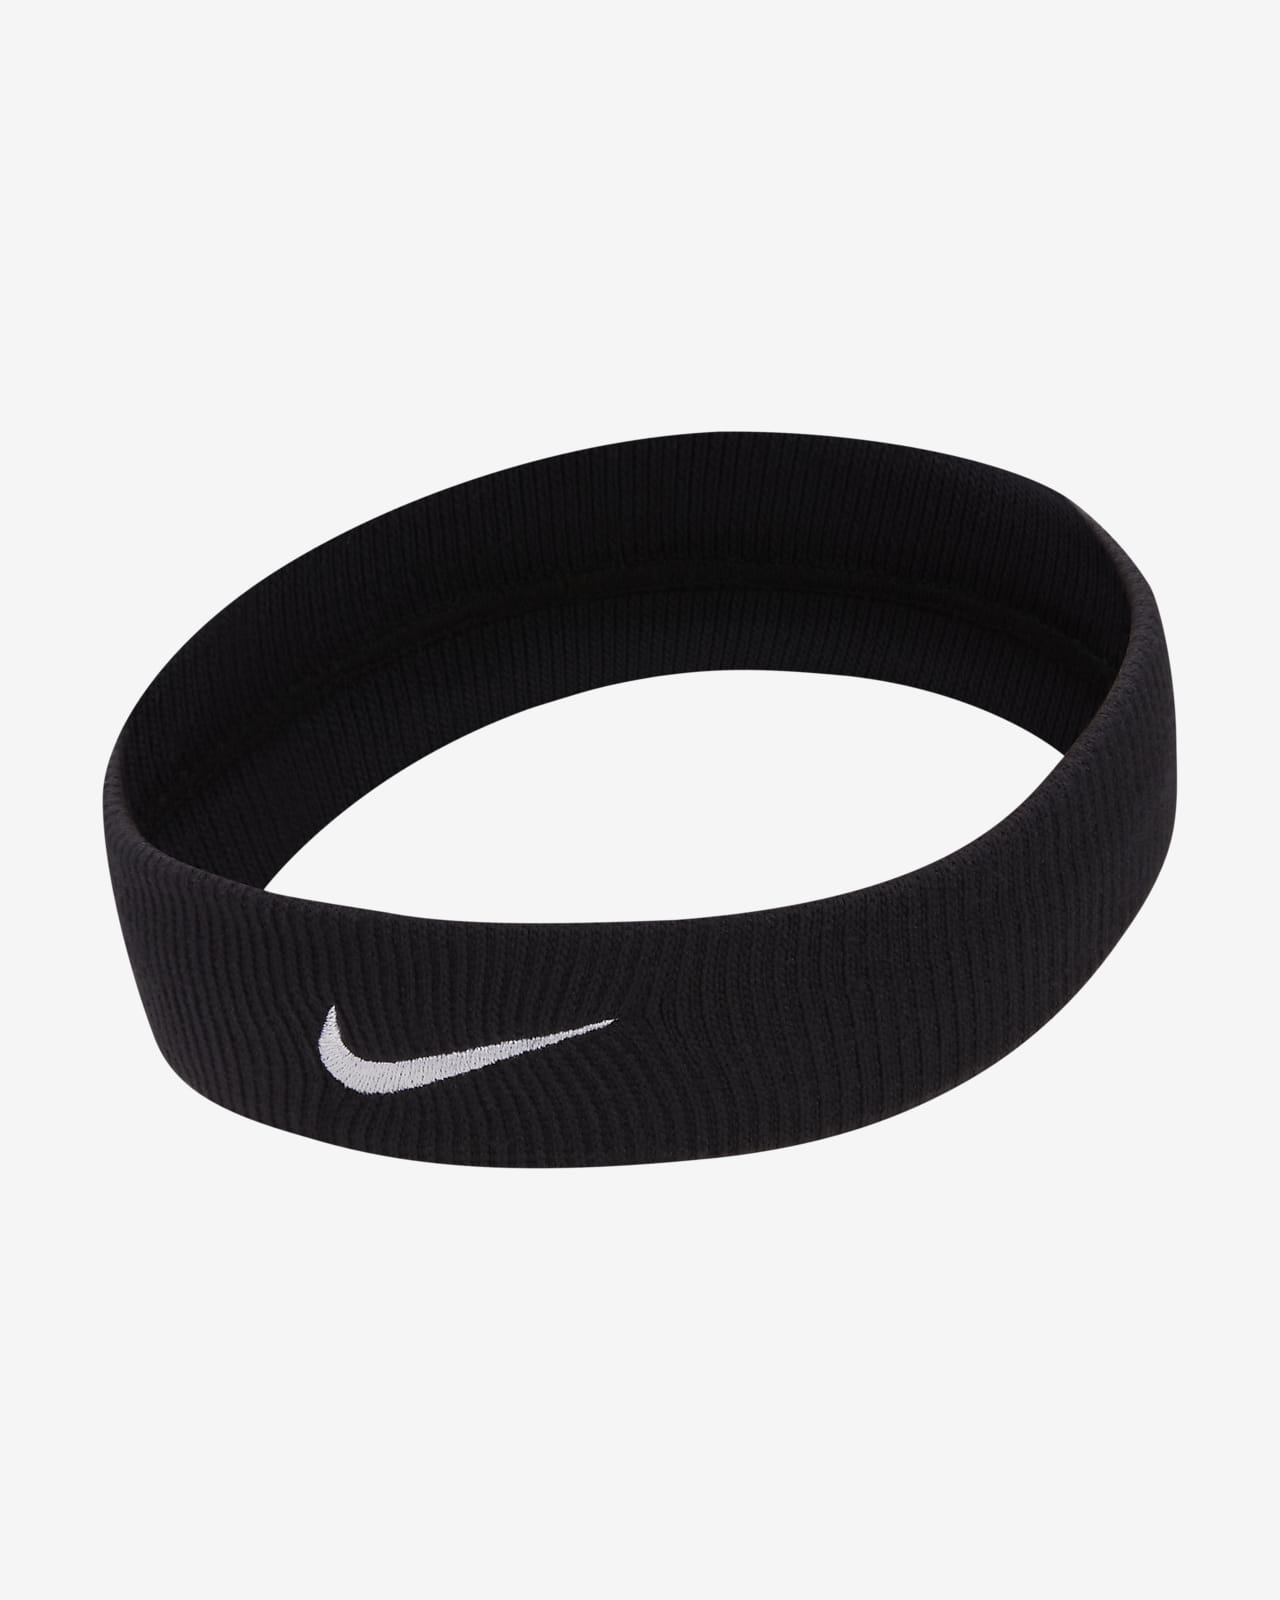 Nike Elite Headband - DX7088-101 - Blanc